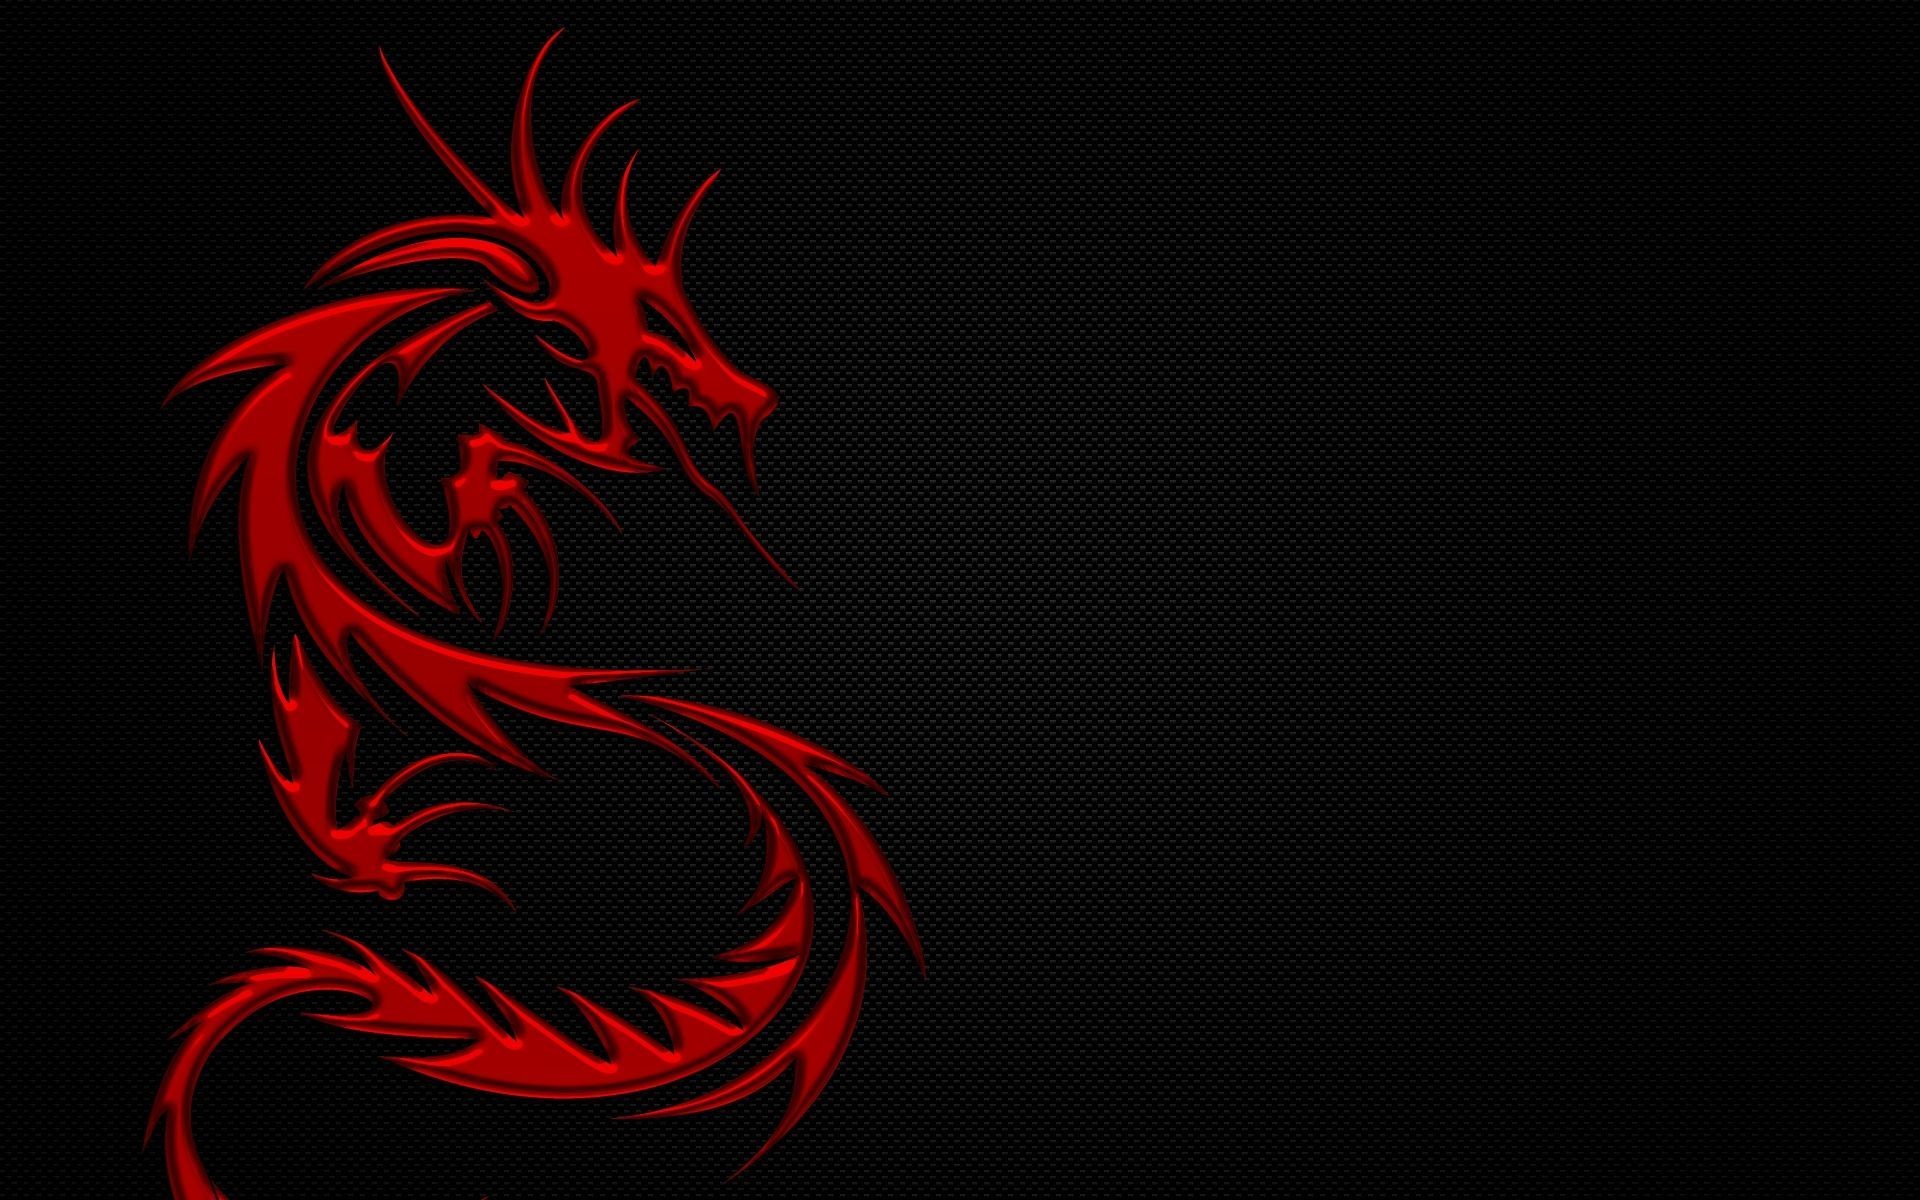 rote drachentapete,rot,schwarz,drachen,erfundener charakter,grafikdesign